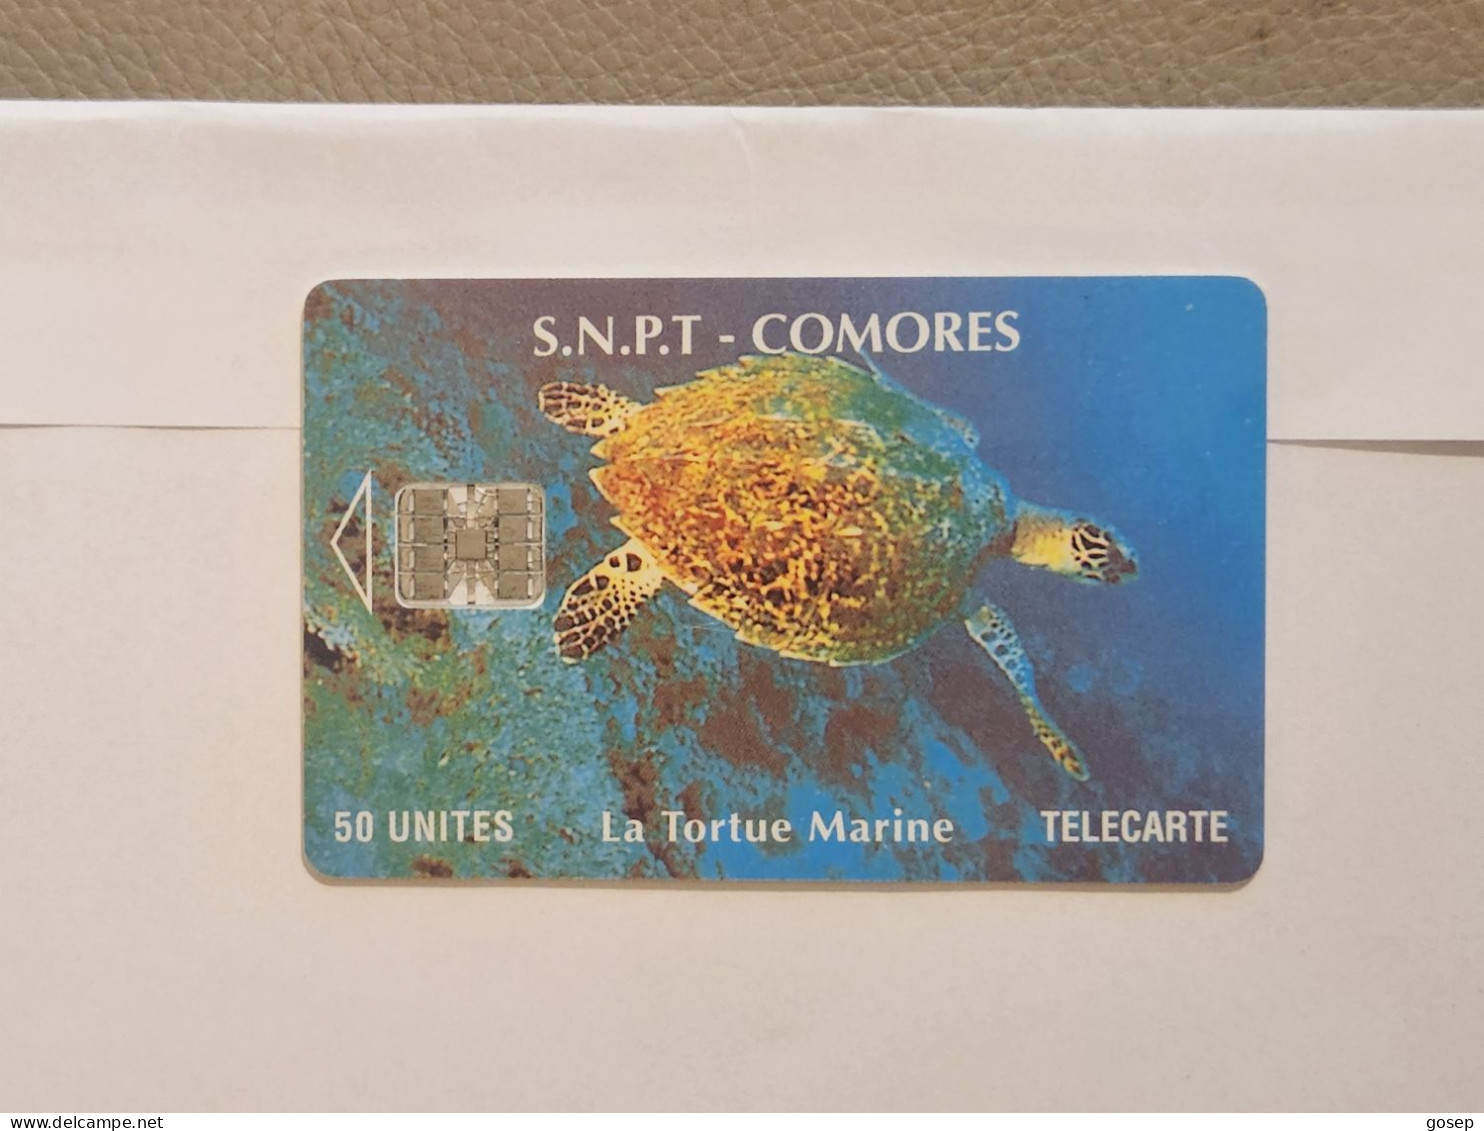 Comores-(KM-OPT-0010C)-La Tortue Marine-(9)-(50units)-(C5B155335)-used Card+1card Prepiad/gift Free - Comore